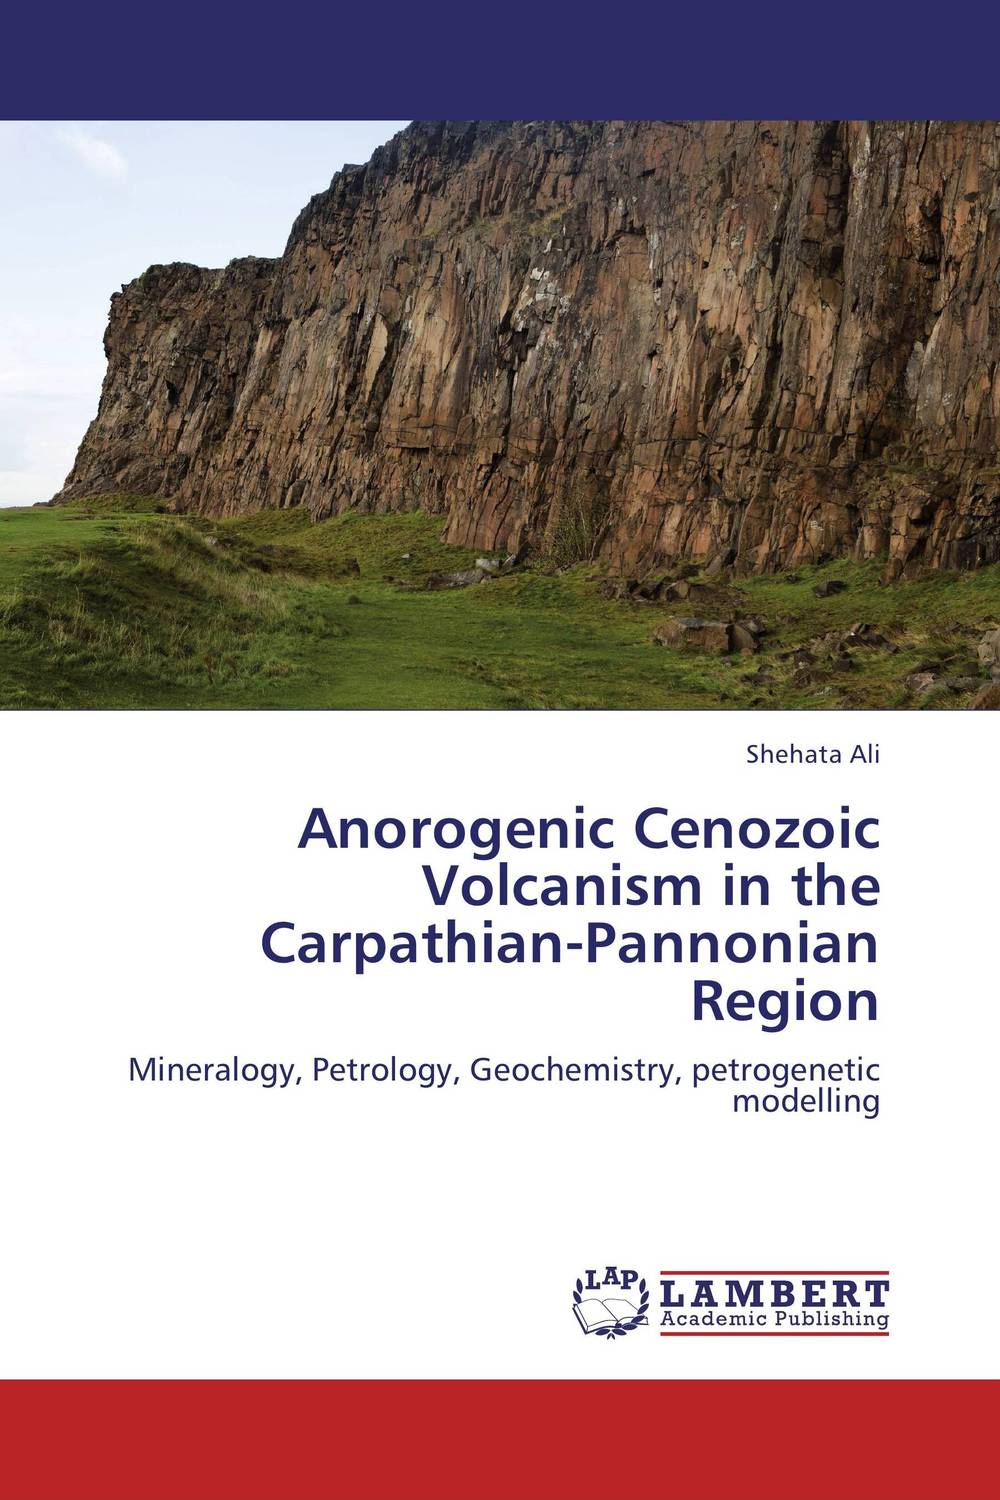 Anorogenic Cenozoic Volcanism in the Carpathian-Pannonian Region